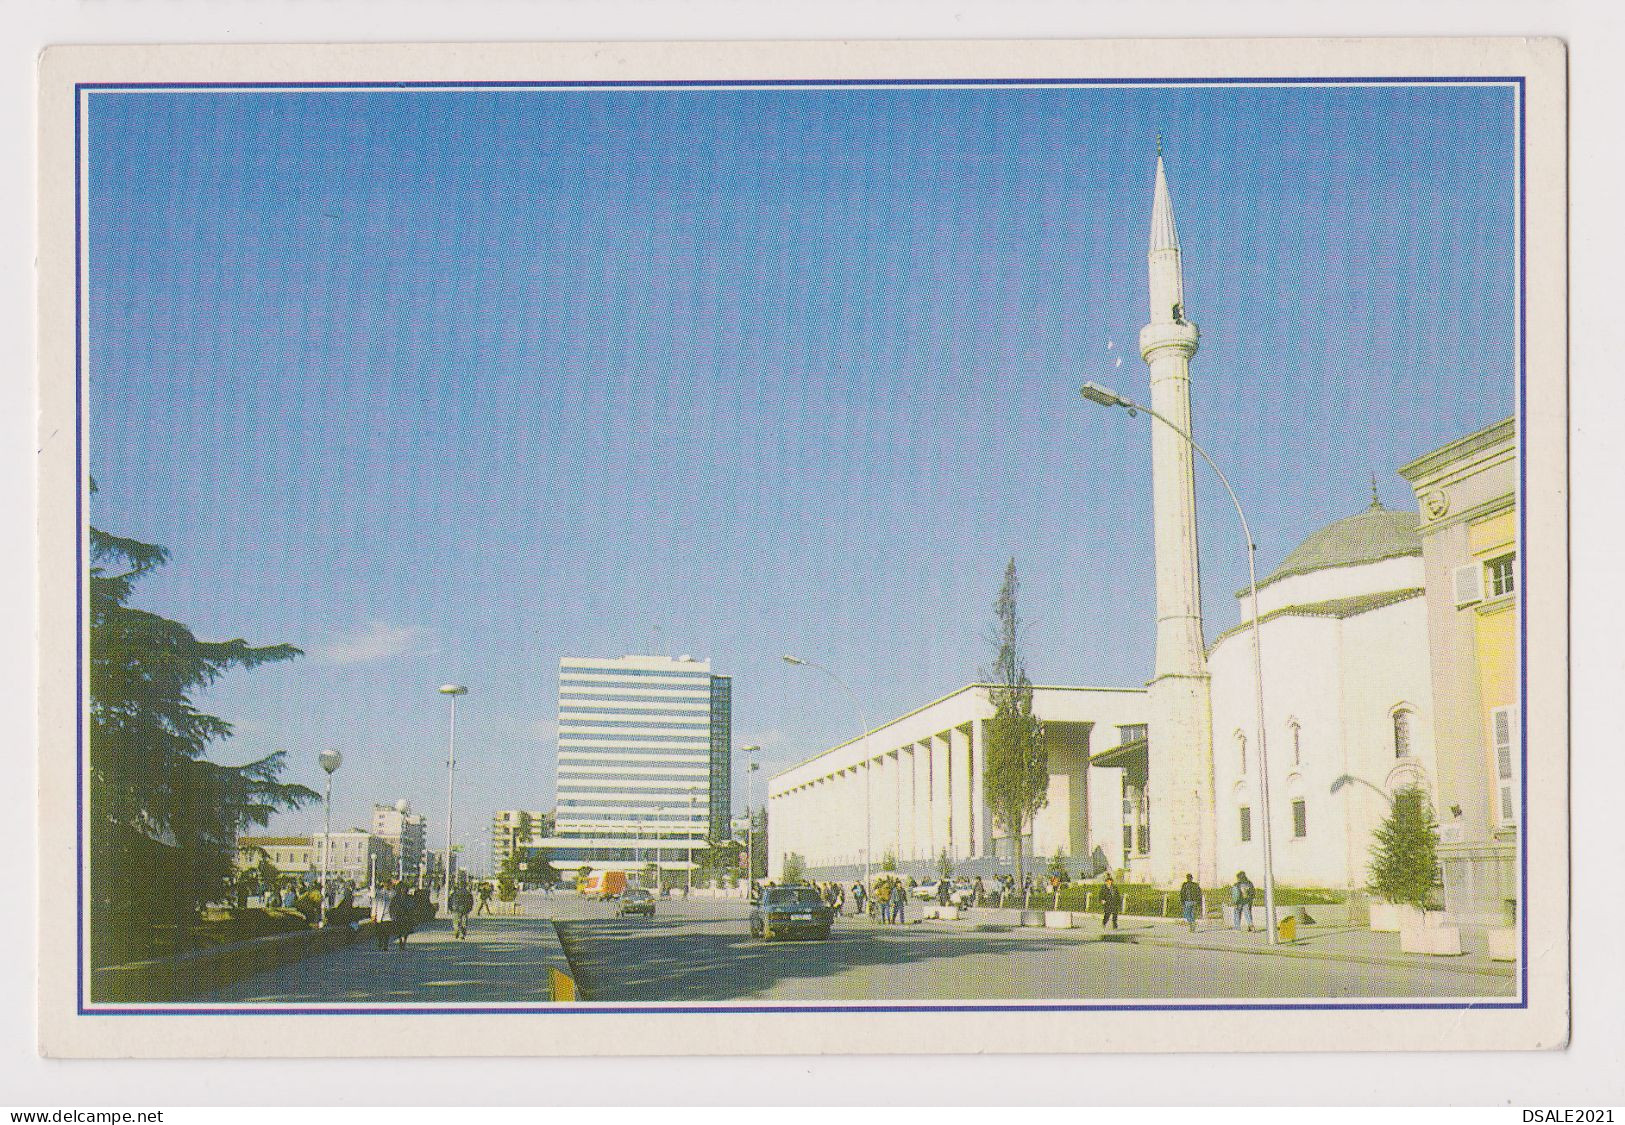 Albania Albanian Capital City TIRANA, Street Scene, Car, Mosque, View Vintage Photo Postcard RPPc AK (68176) - Albanie